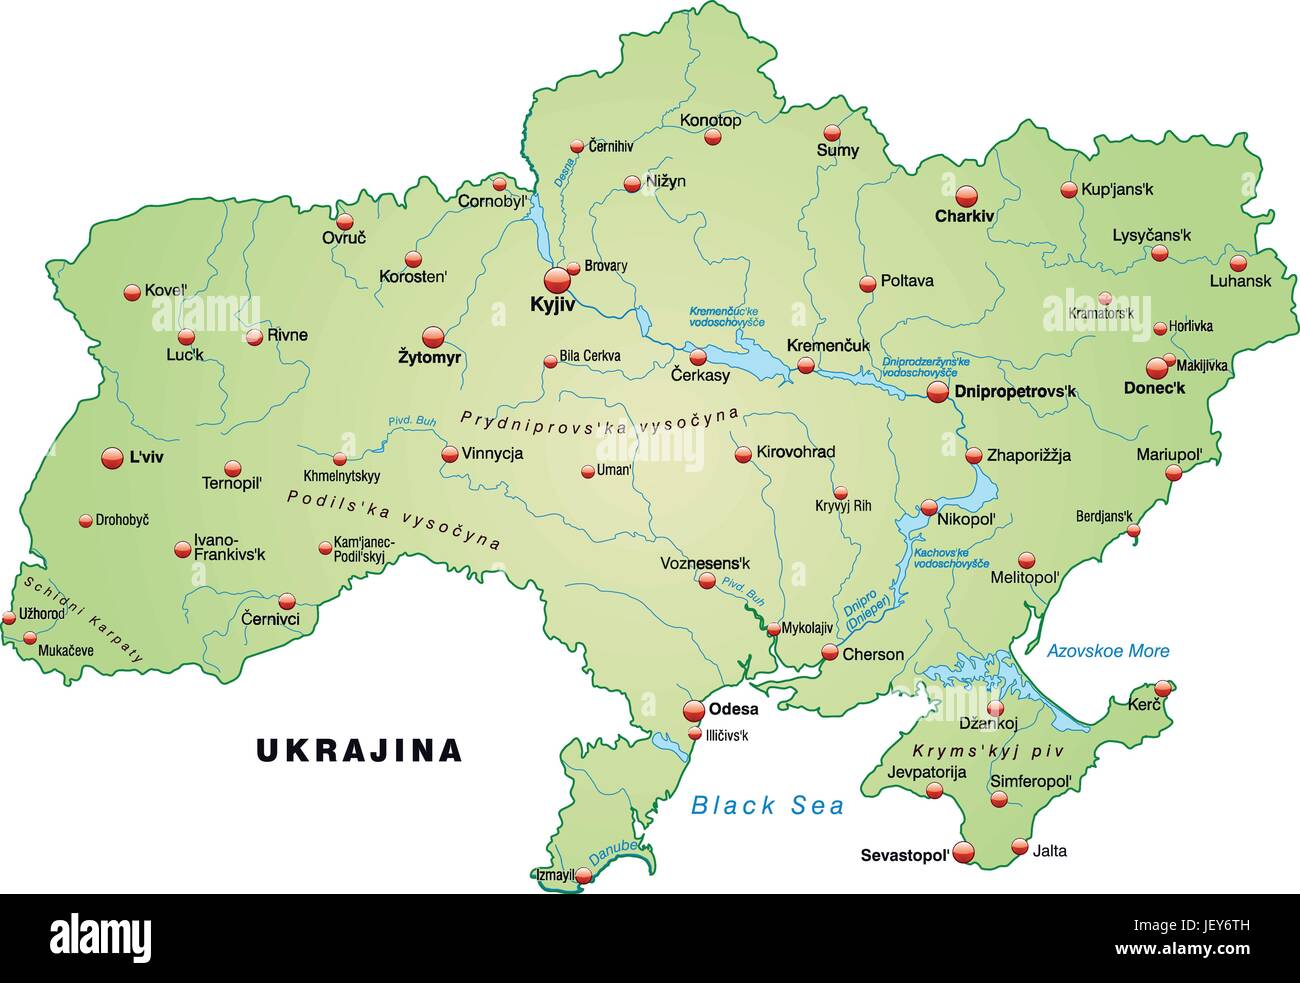 Сума город на карте. Конотоп на карте Украины. Карта Украины Буча на карте Украины. Сумы Украина на карте. Г Сумы на карте Украины.